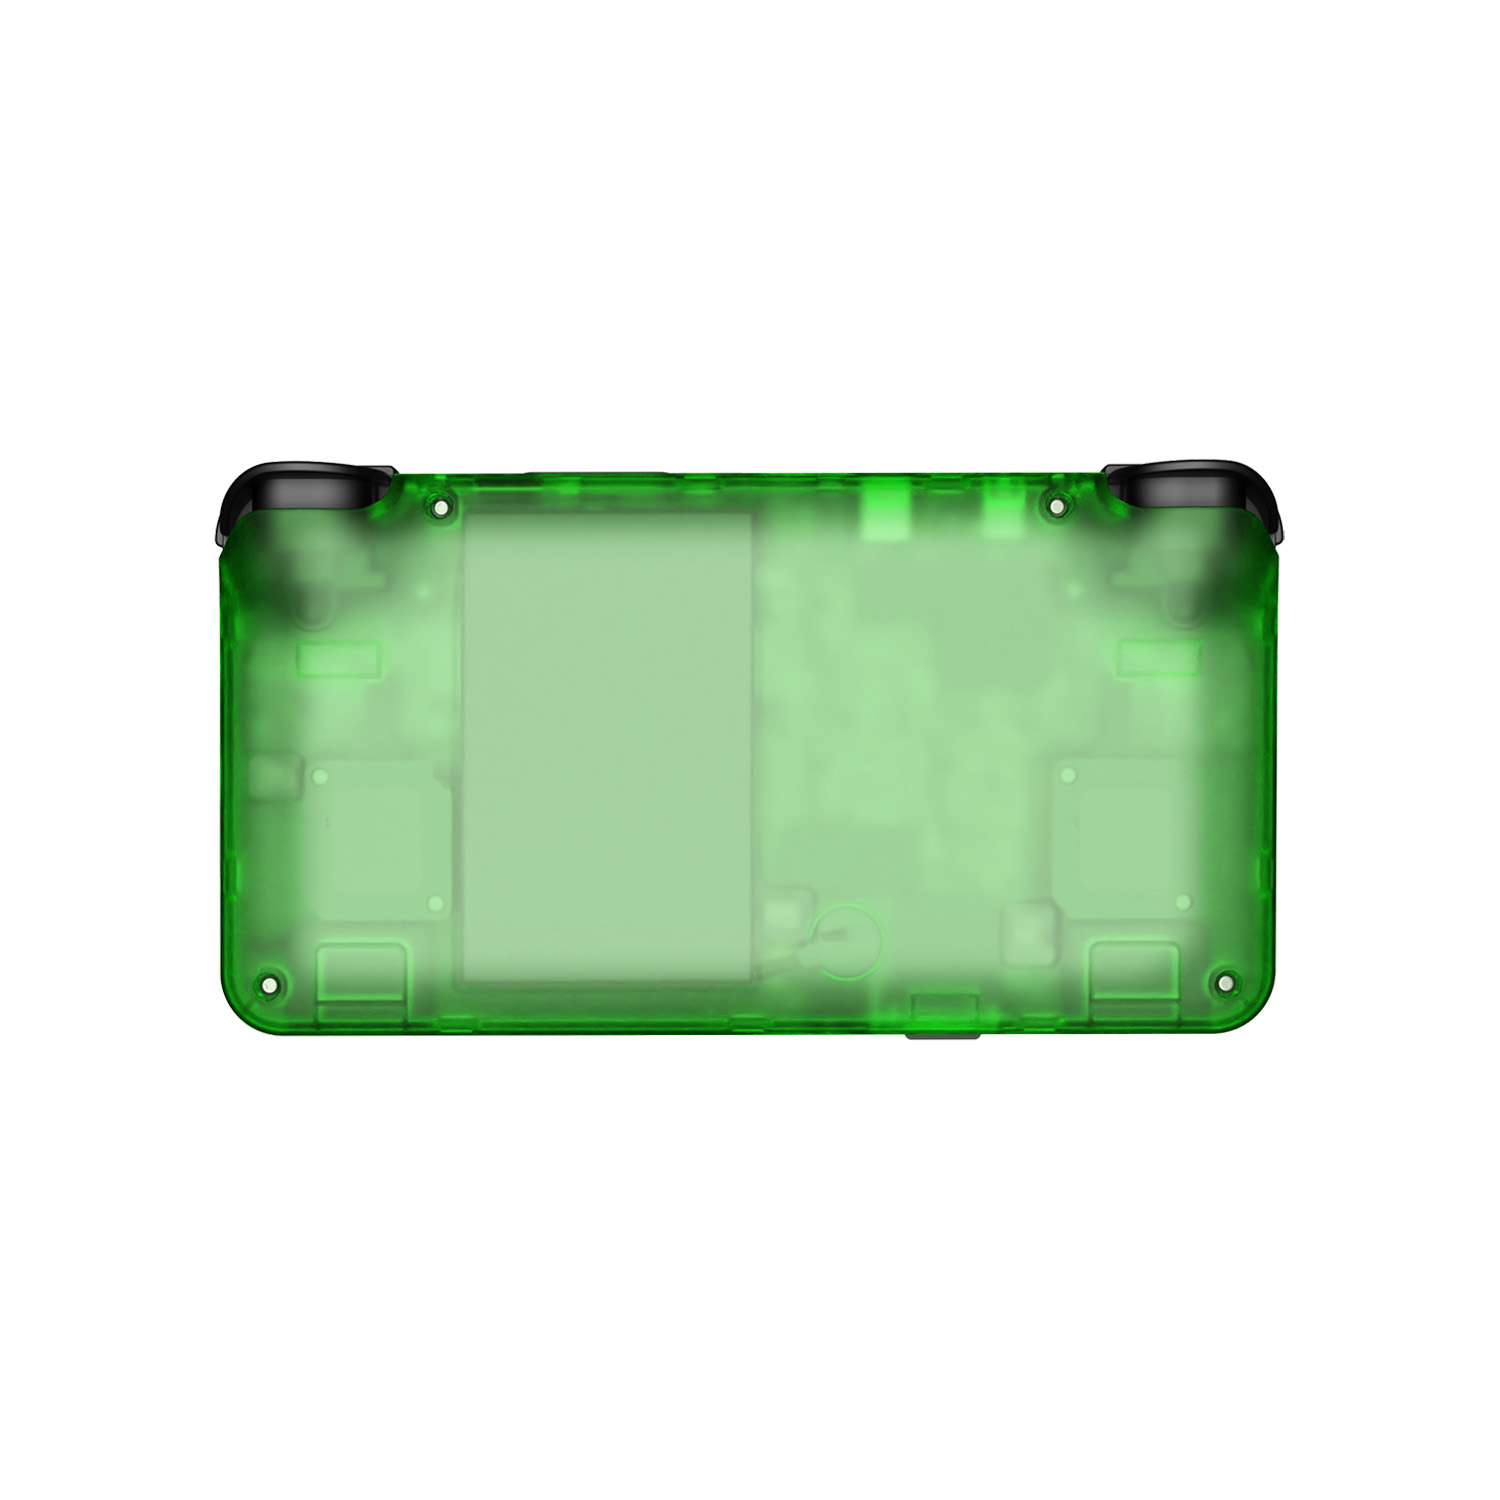 RETROID POCKET 2S - Clear Green DRAM: 4GB LPDDR4, 128GB eMMC